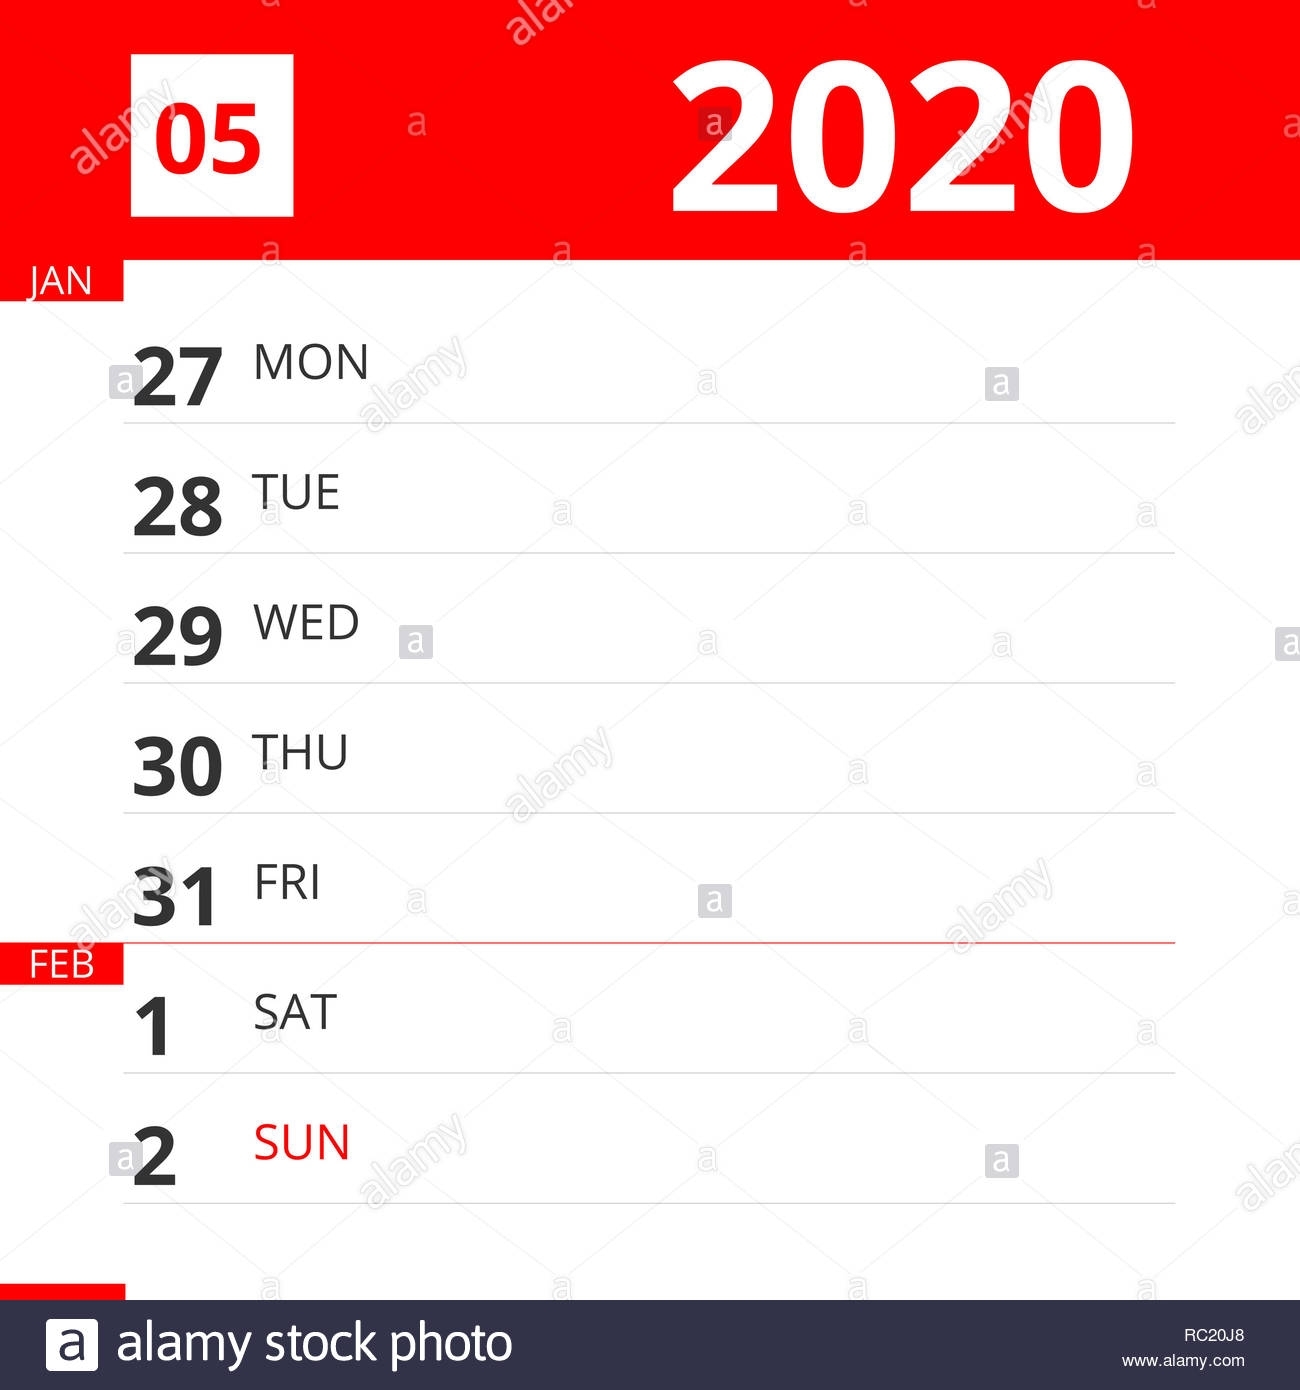 Calendar Planner For Week 05 In 2020, Ends February 2, 2020